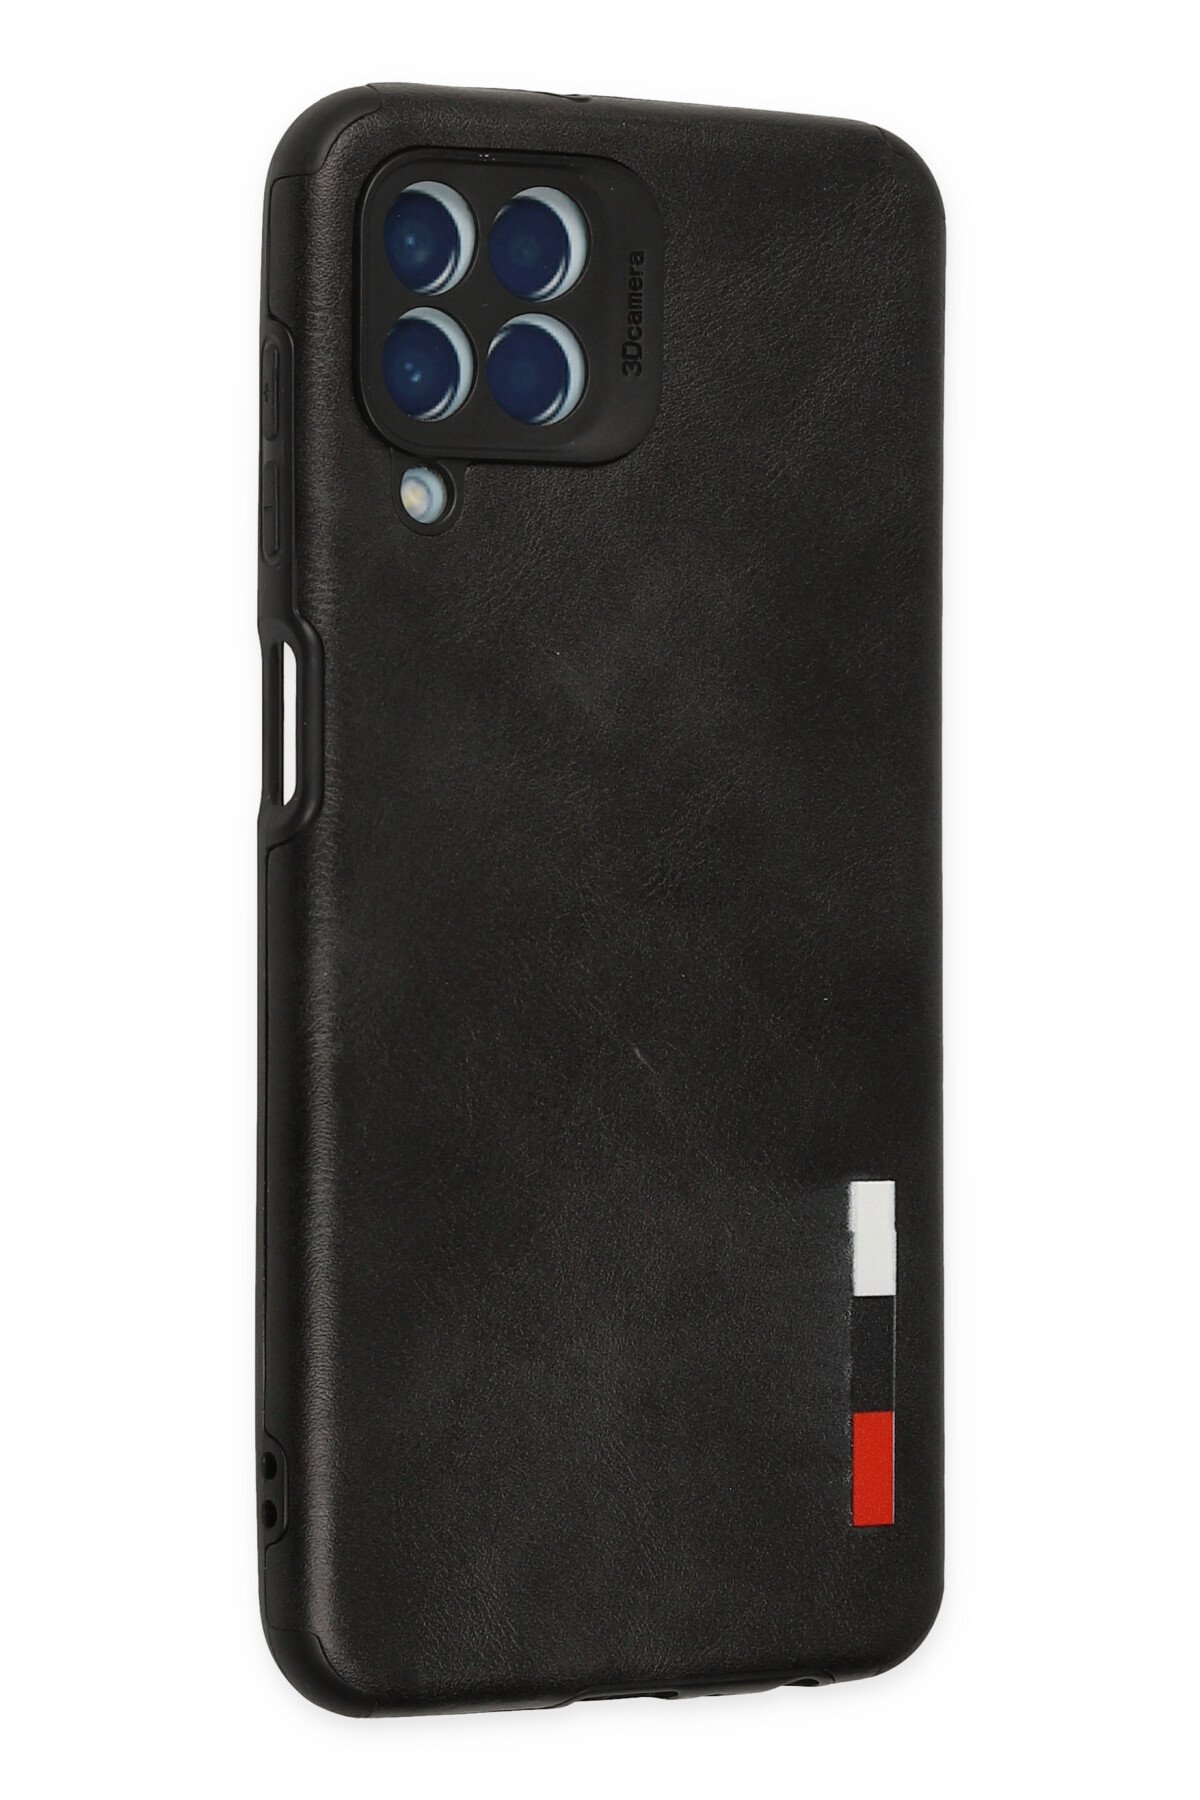 Newface Samsung Galaxy M33 Kılıf Volet Silikon - Kırmızı